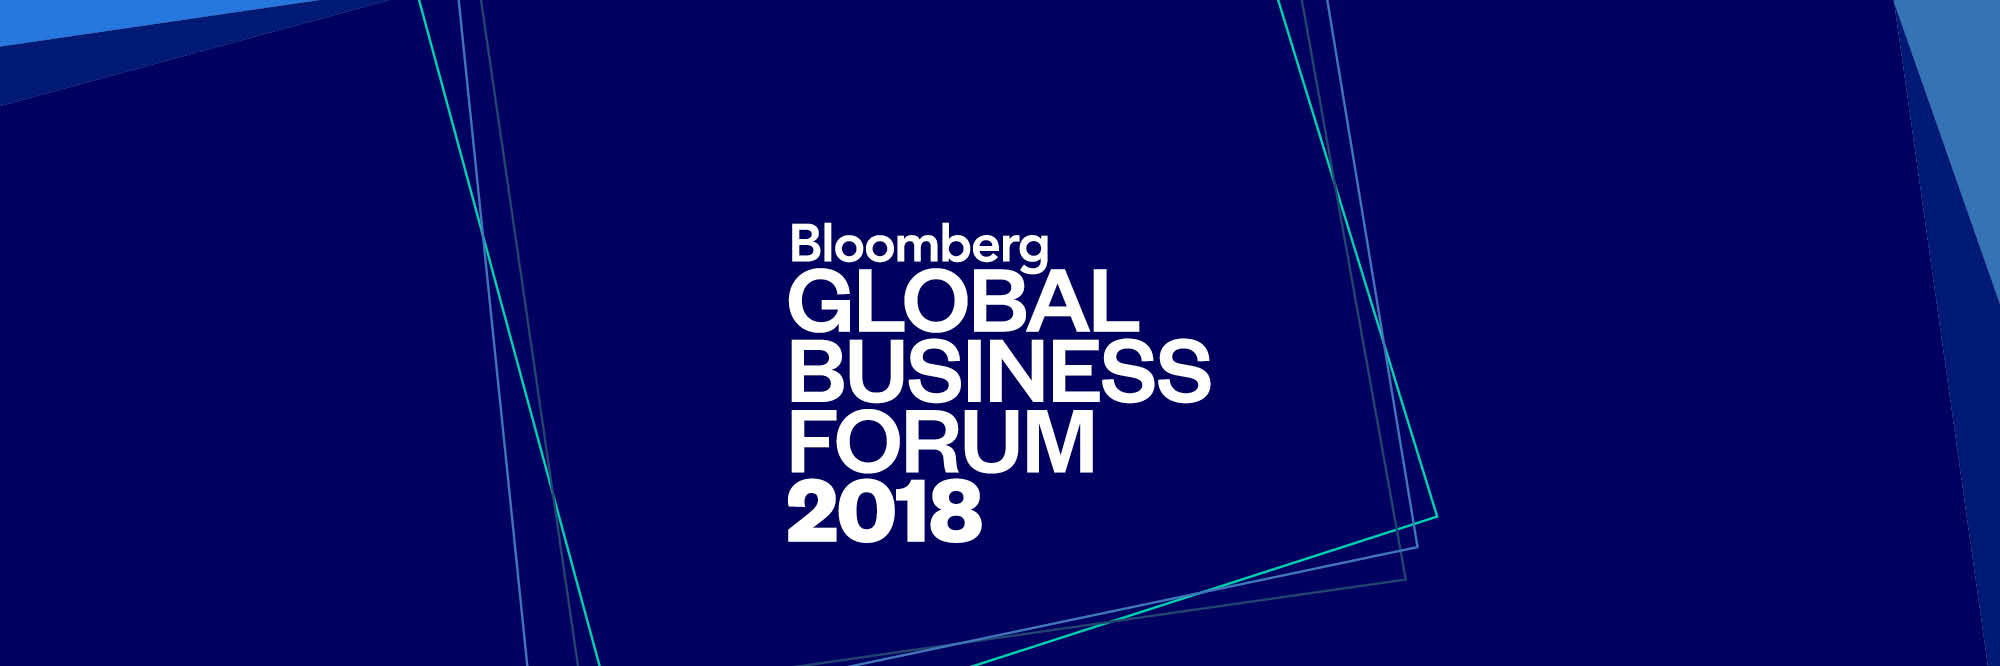 Kusto Group at the Bloomberg Global Business Forum: Yerkin Tatishev Blog